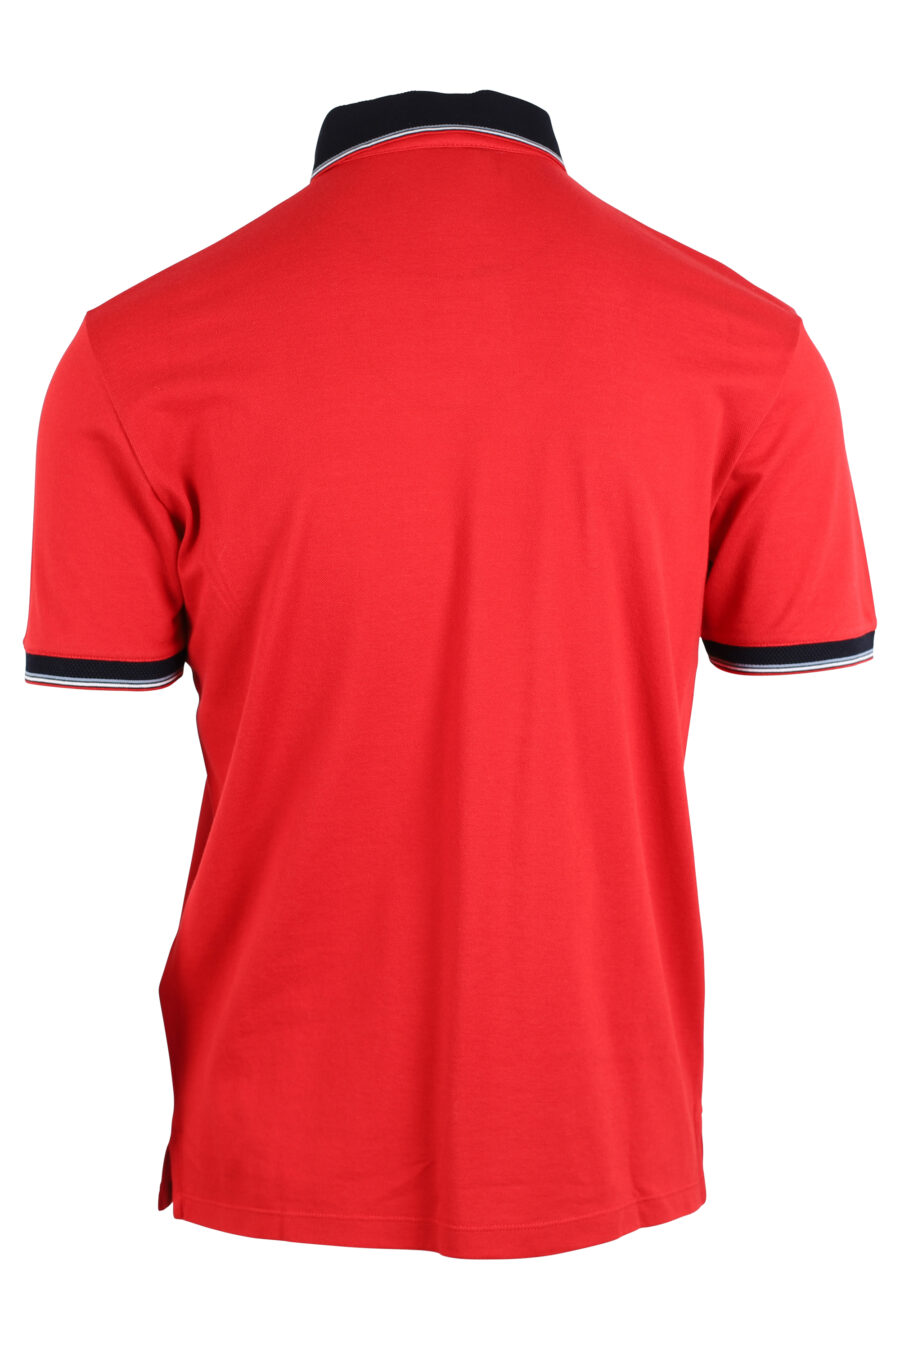 Rotes Poloshirt mit schwarzem und Adler-Mini-Logo - IMG 4745